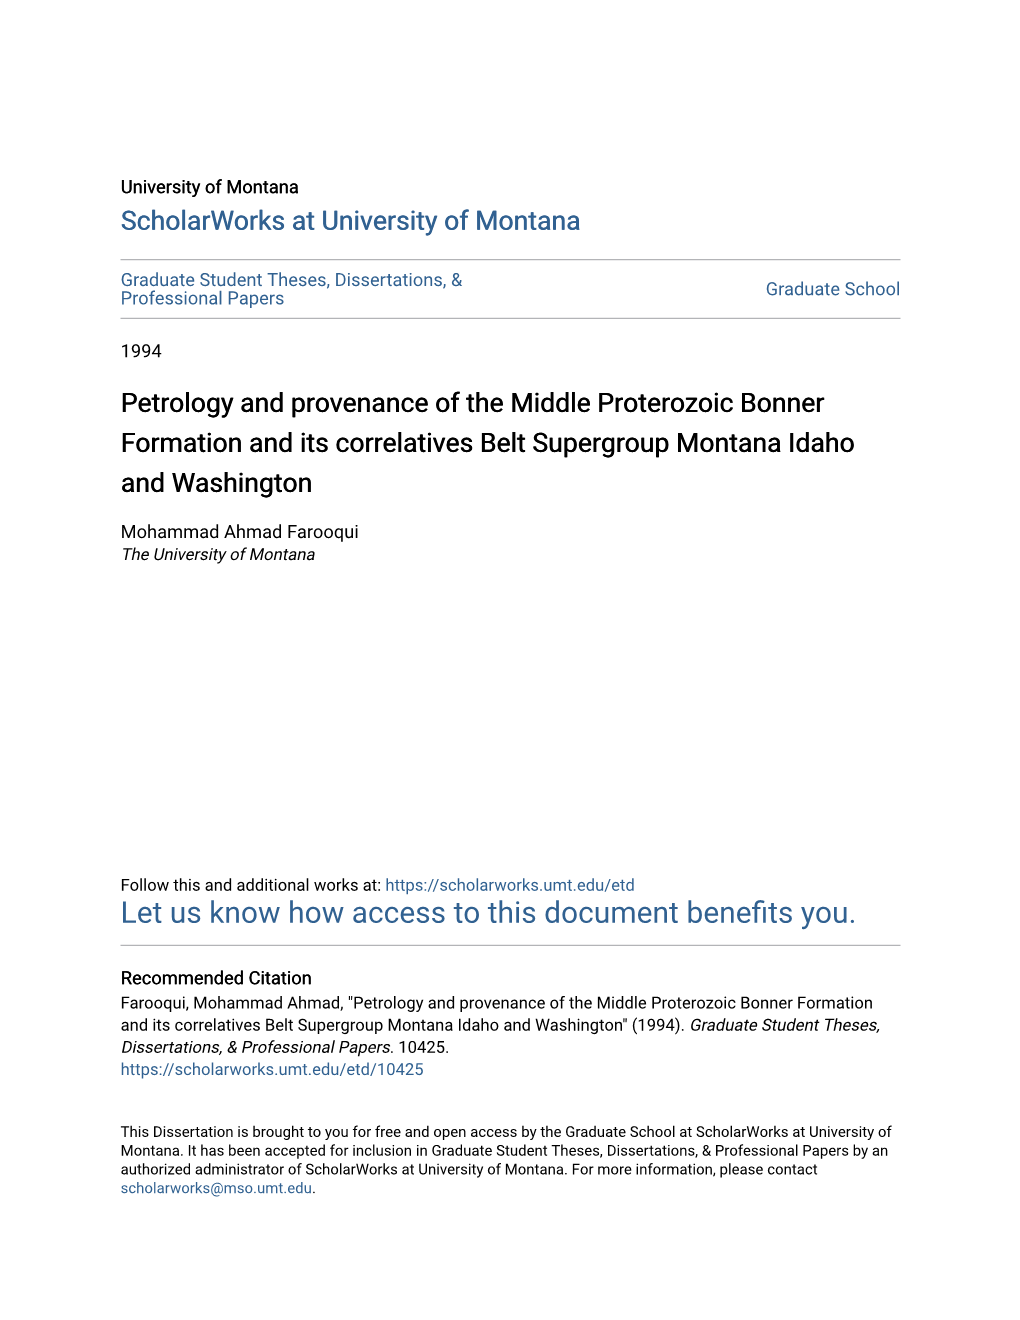 Petrology and Provenance of the Middle Proterozoic Bonner Formation and Its Correlatives Belt Supergroup Montana Idaho and Washington